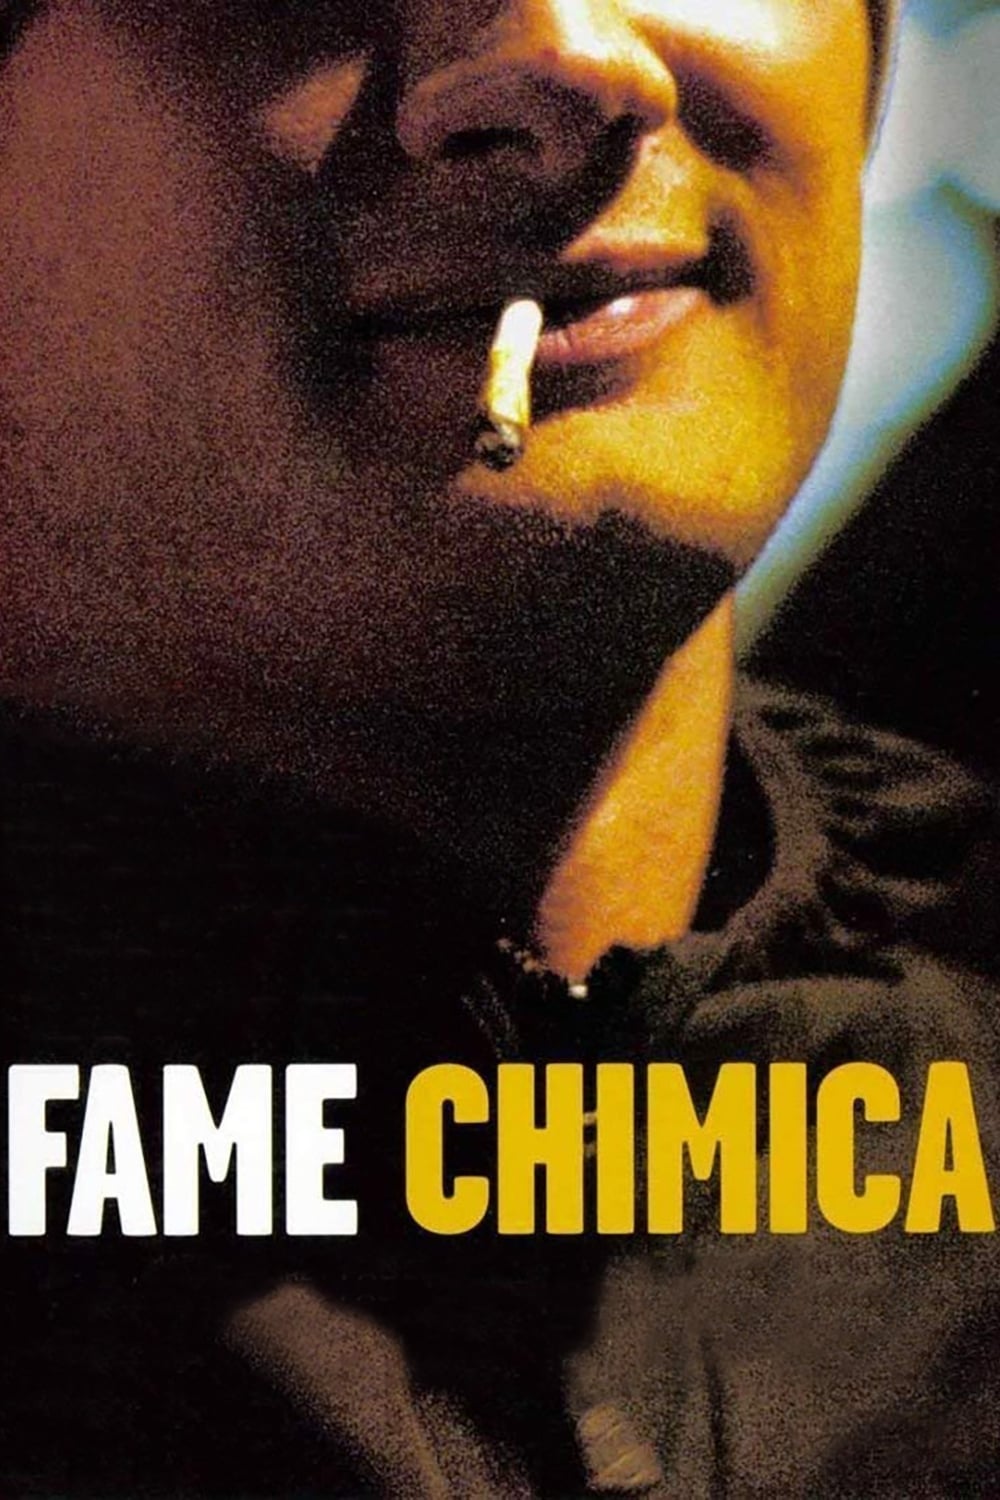 Fame chimica film